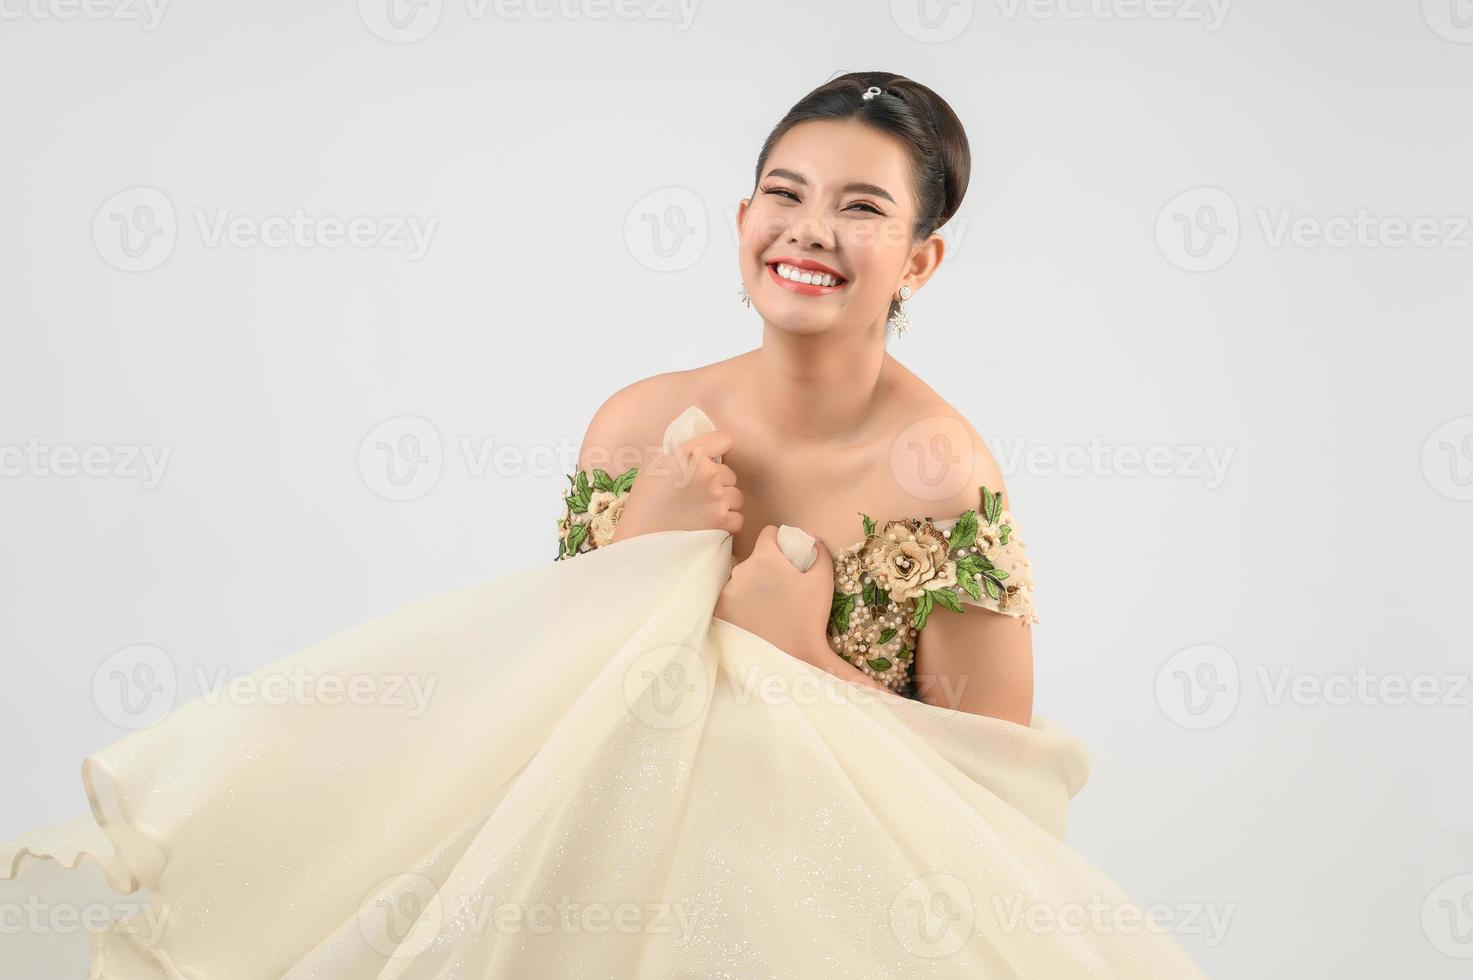 jong Aziatisch mooi bruid glimlachen met gelukkig Aan wit achtergrond foto